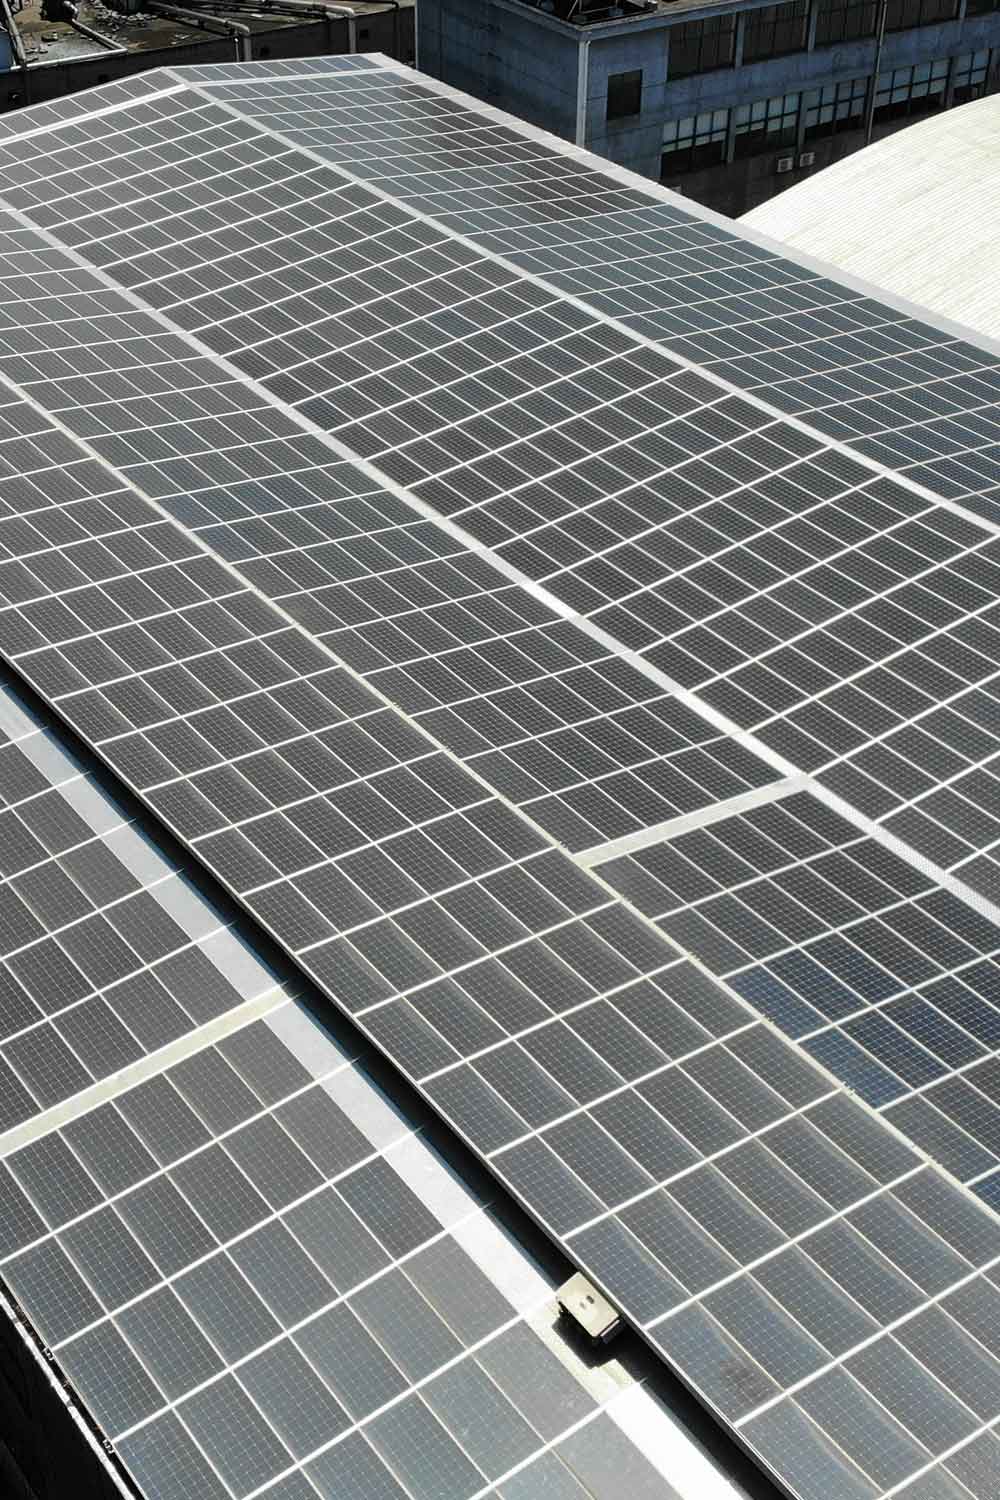 SpolarPV Dual Solar Panel Installation